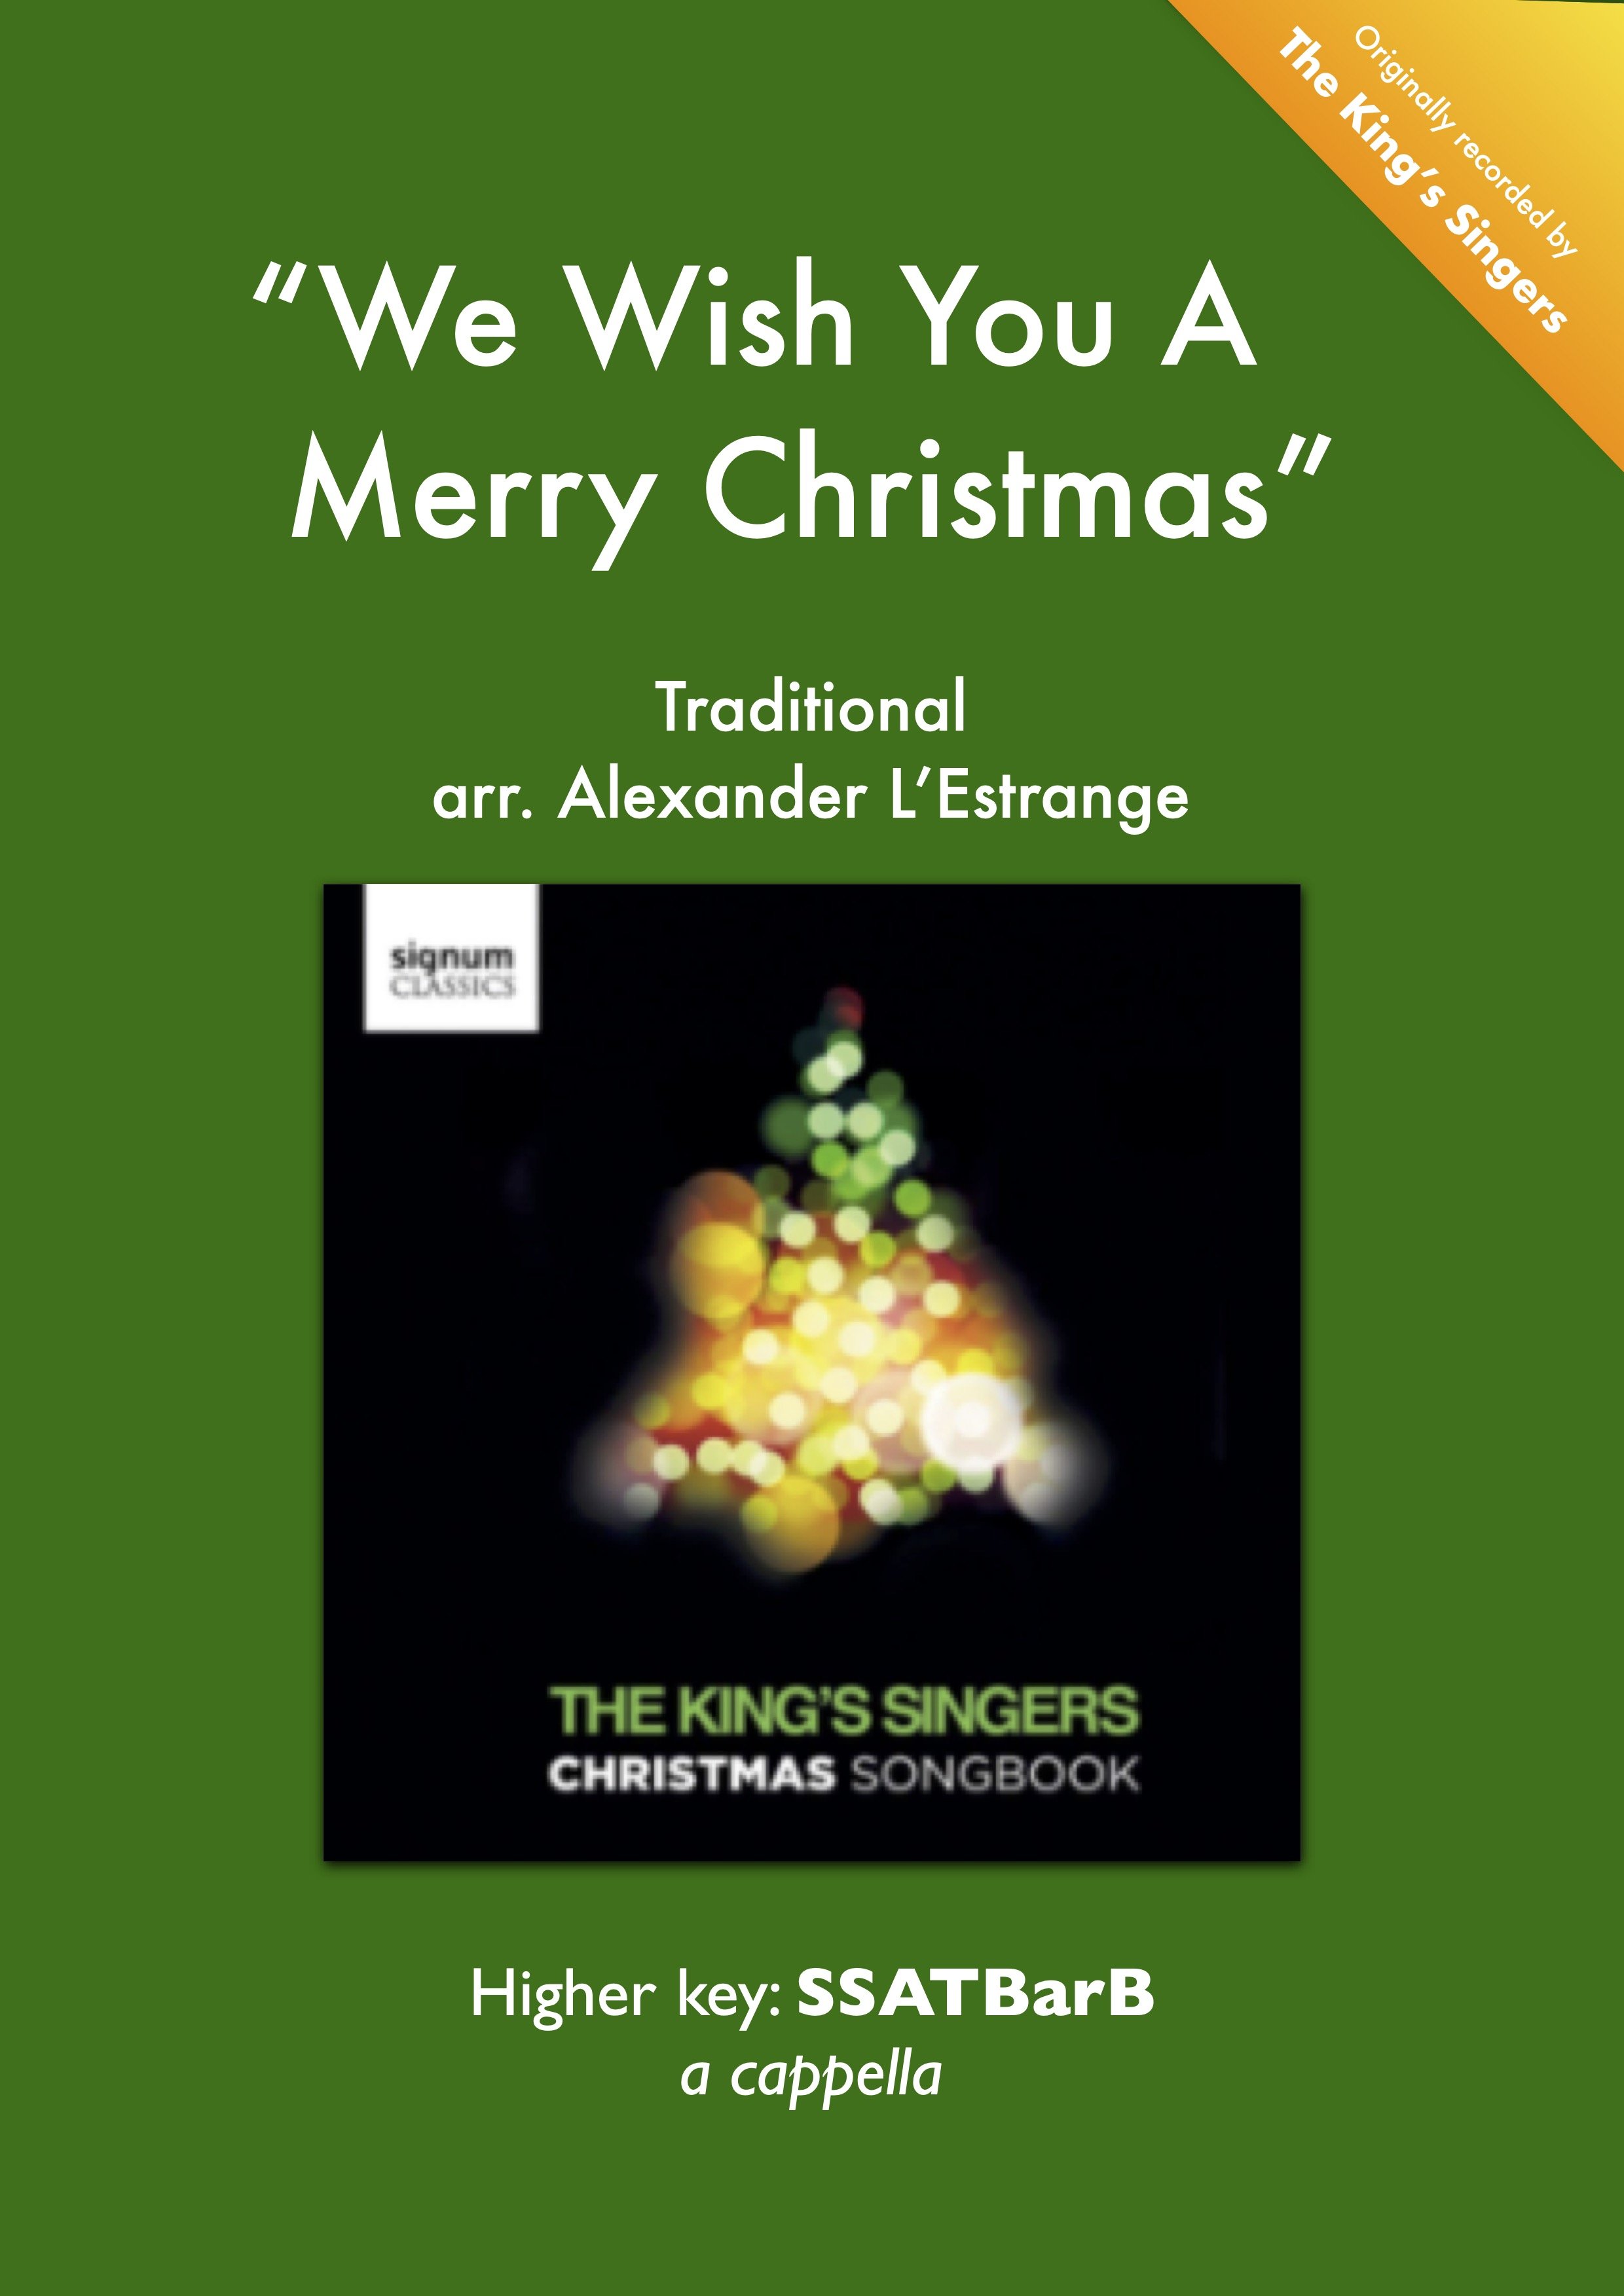 We Wish You a Merry Christmas arr. Alexander L'Estrange HIGHER KEY.jpg